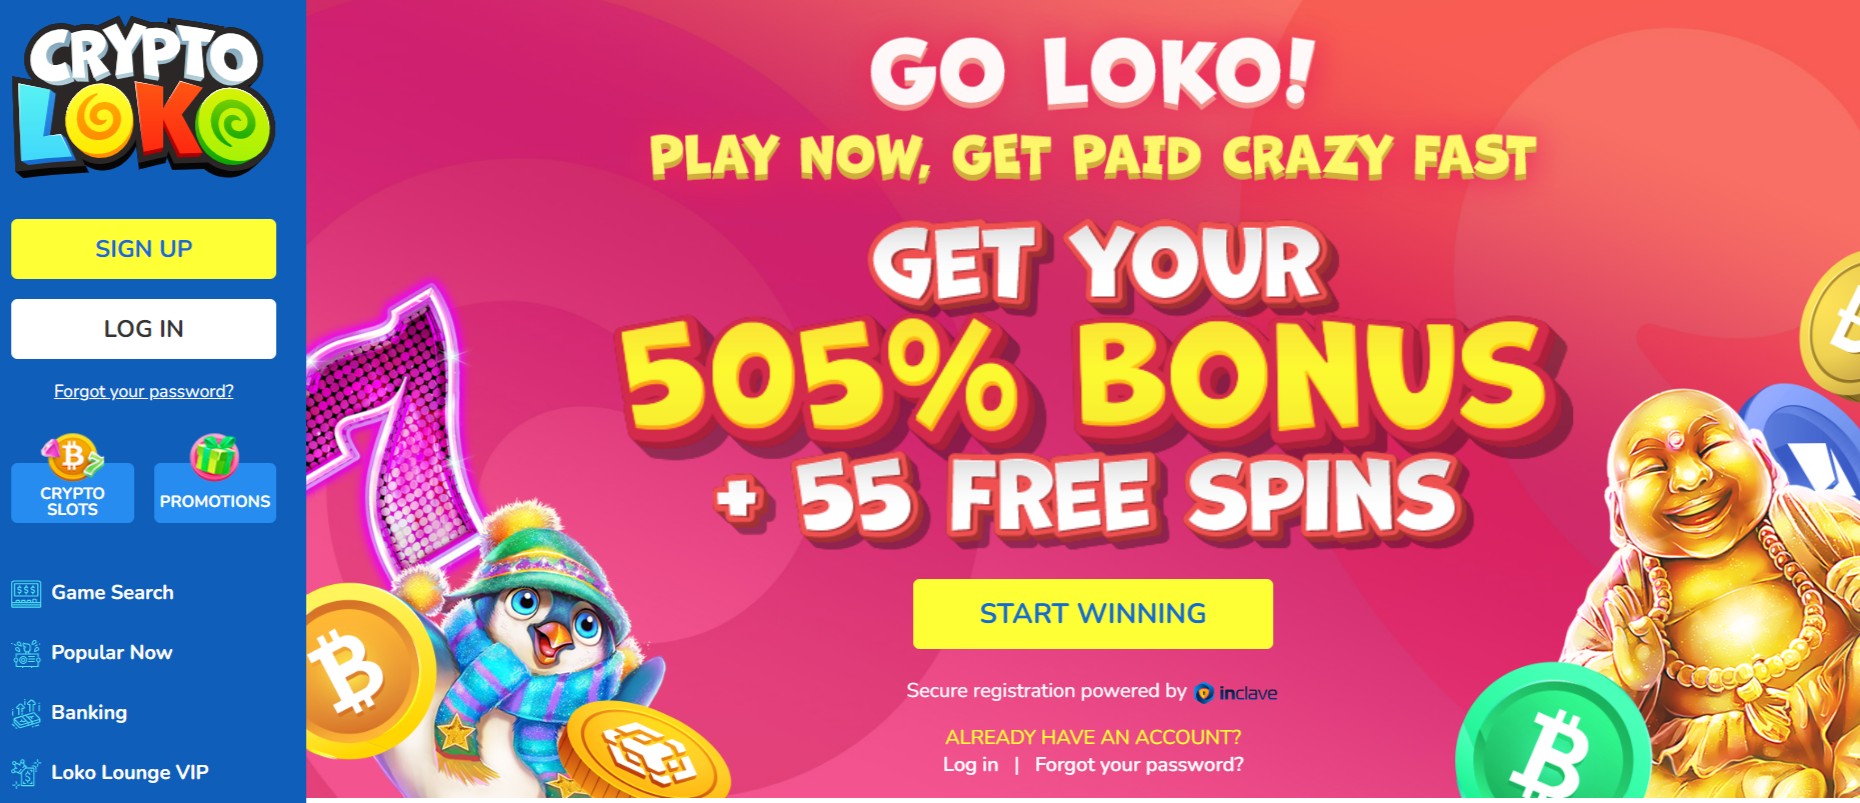 Crypto loko homepage screenshot